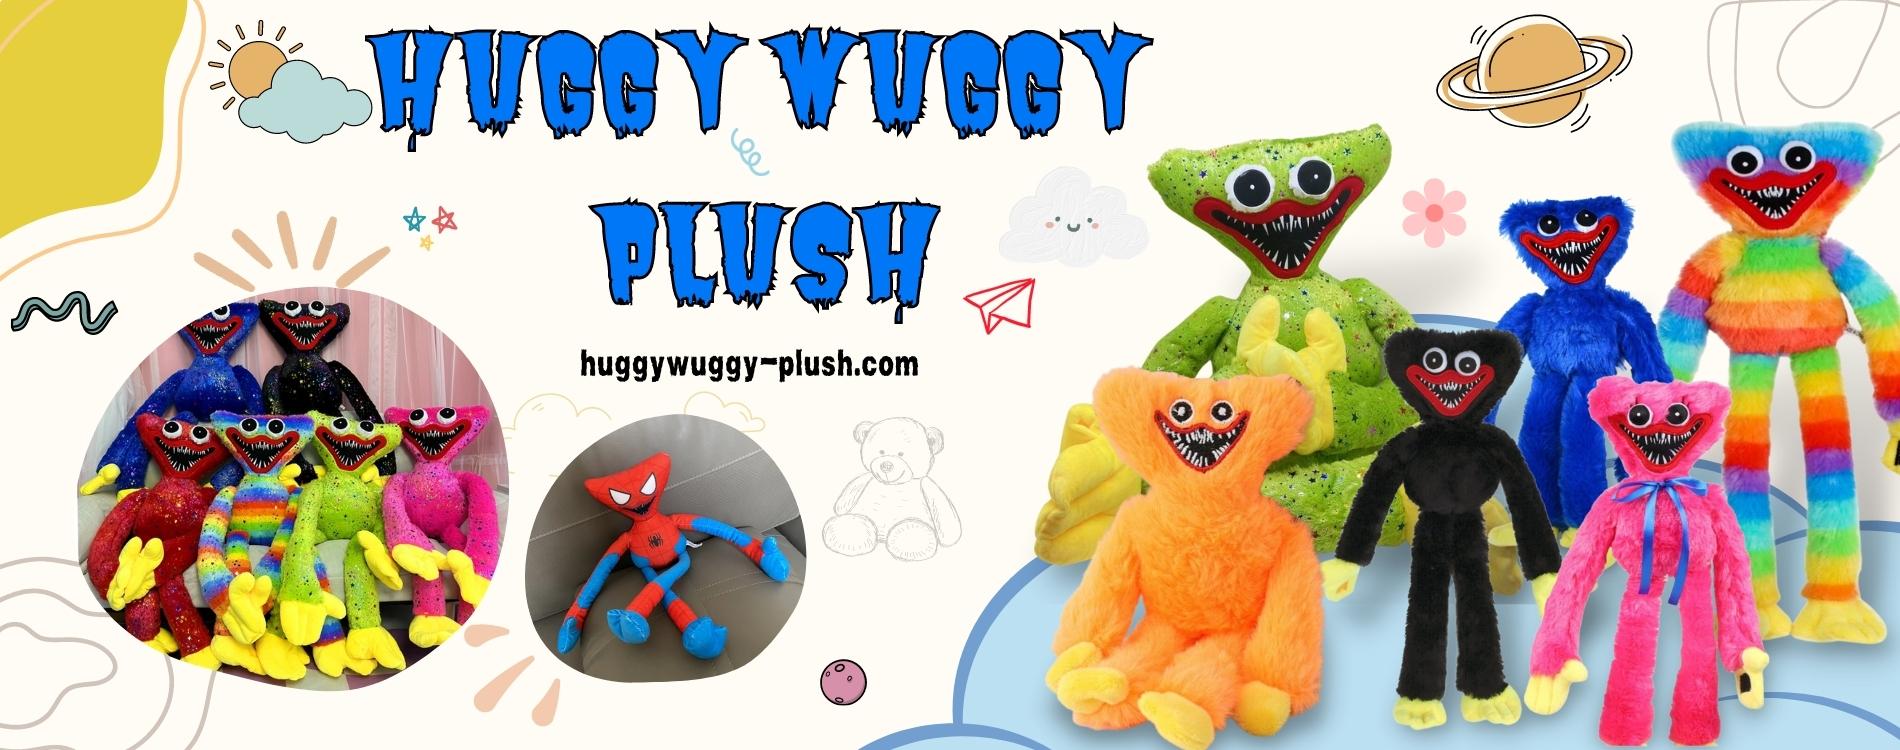 huggy-wuggy-plush-banner v3